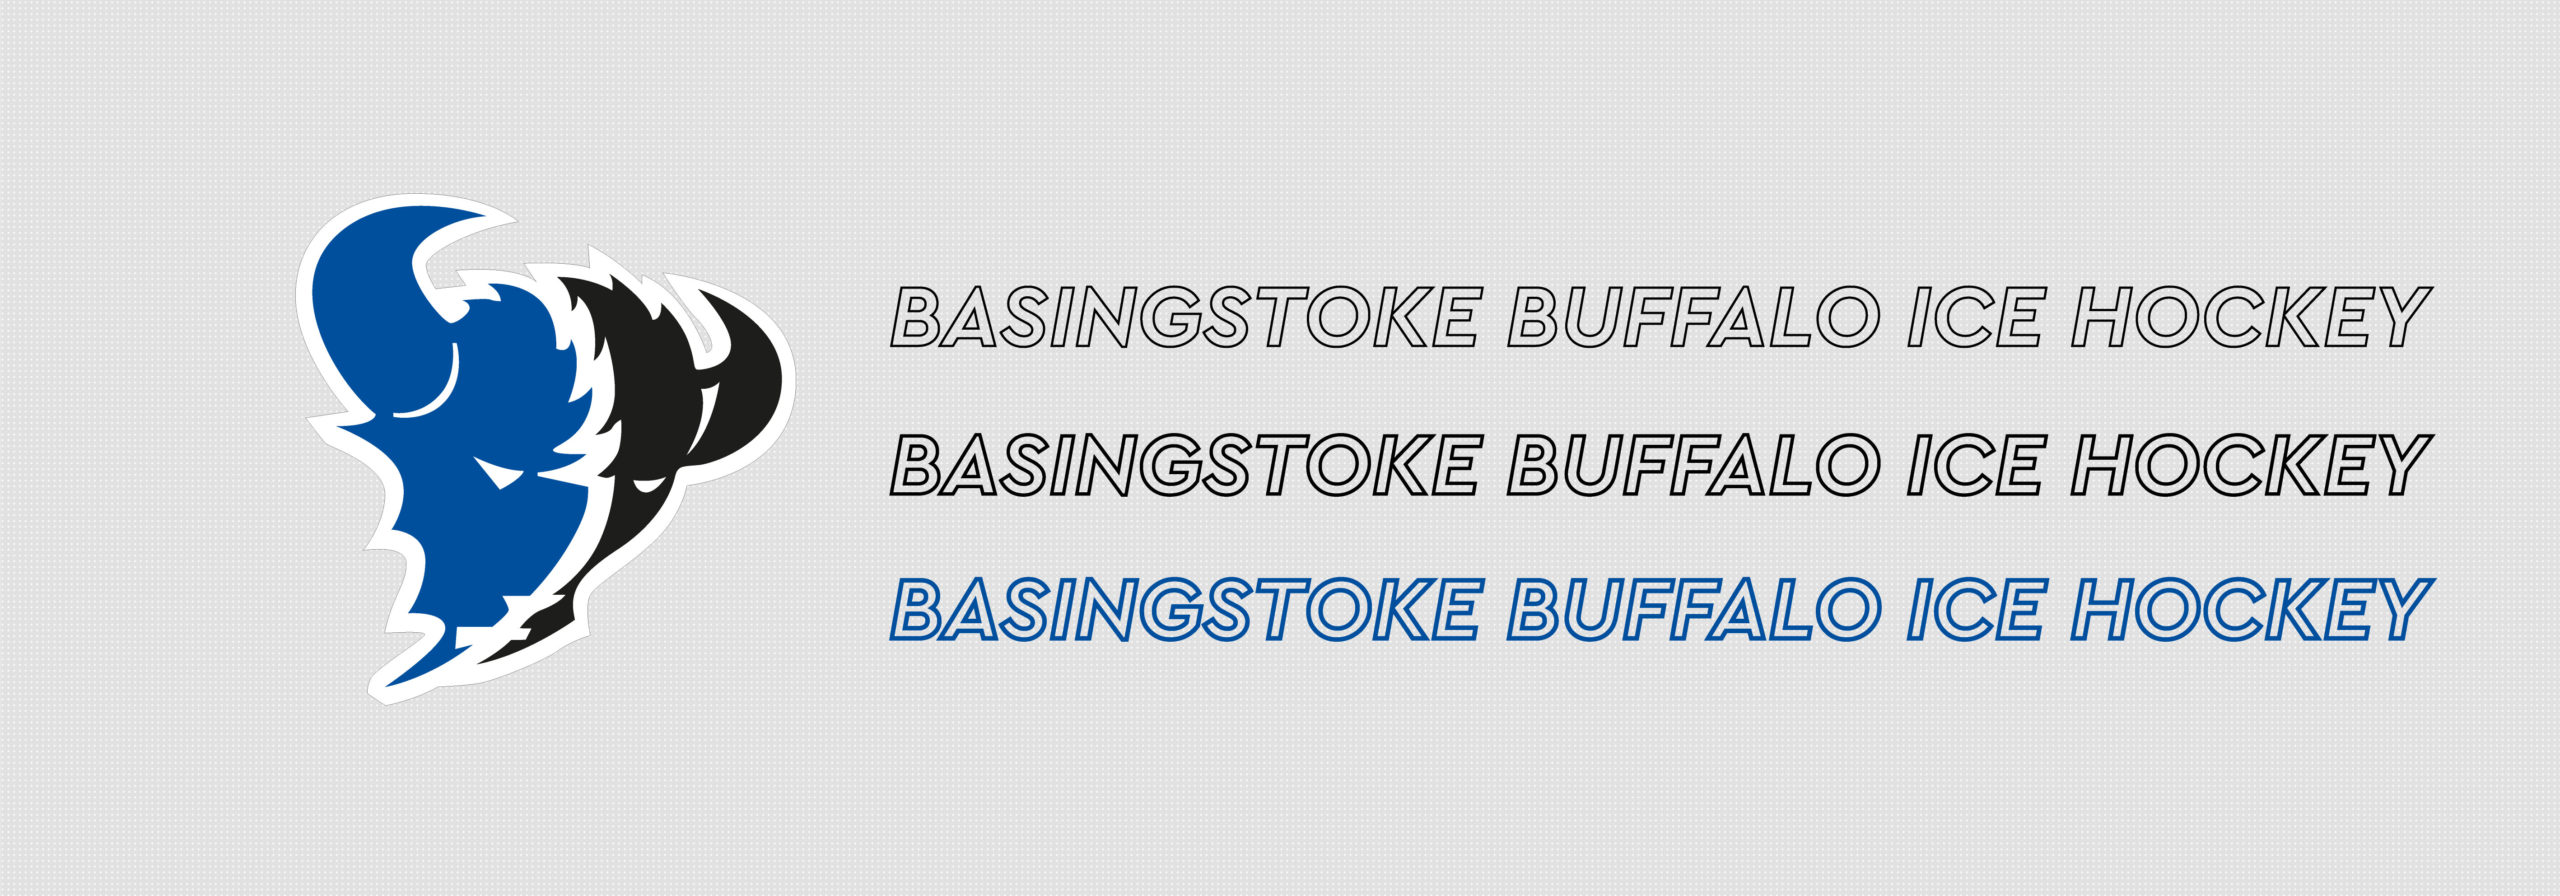 Basingstoke Buffalo Ice Hockey Club